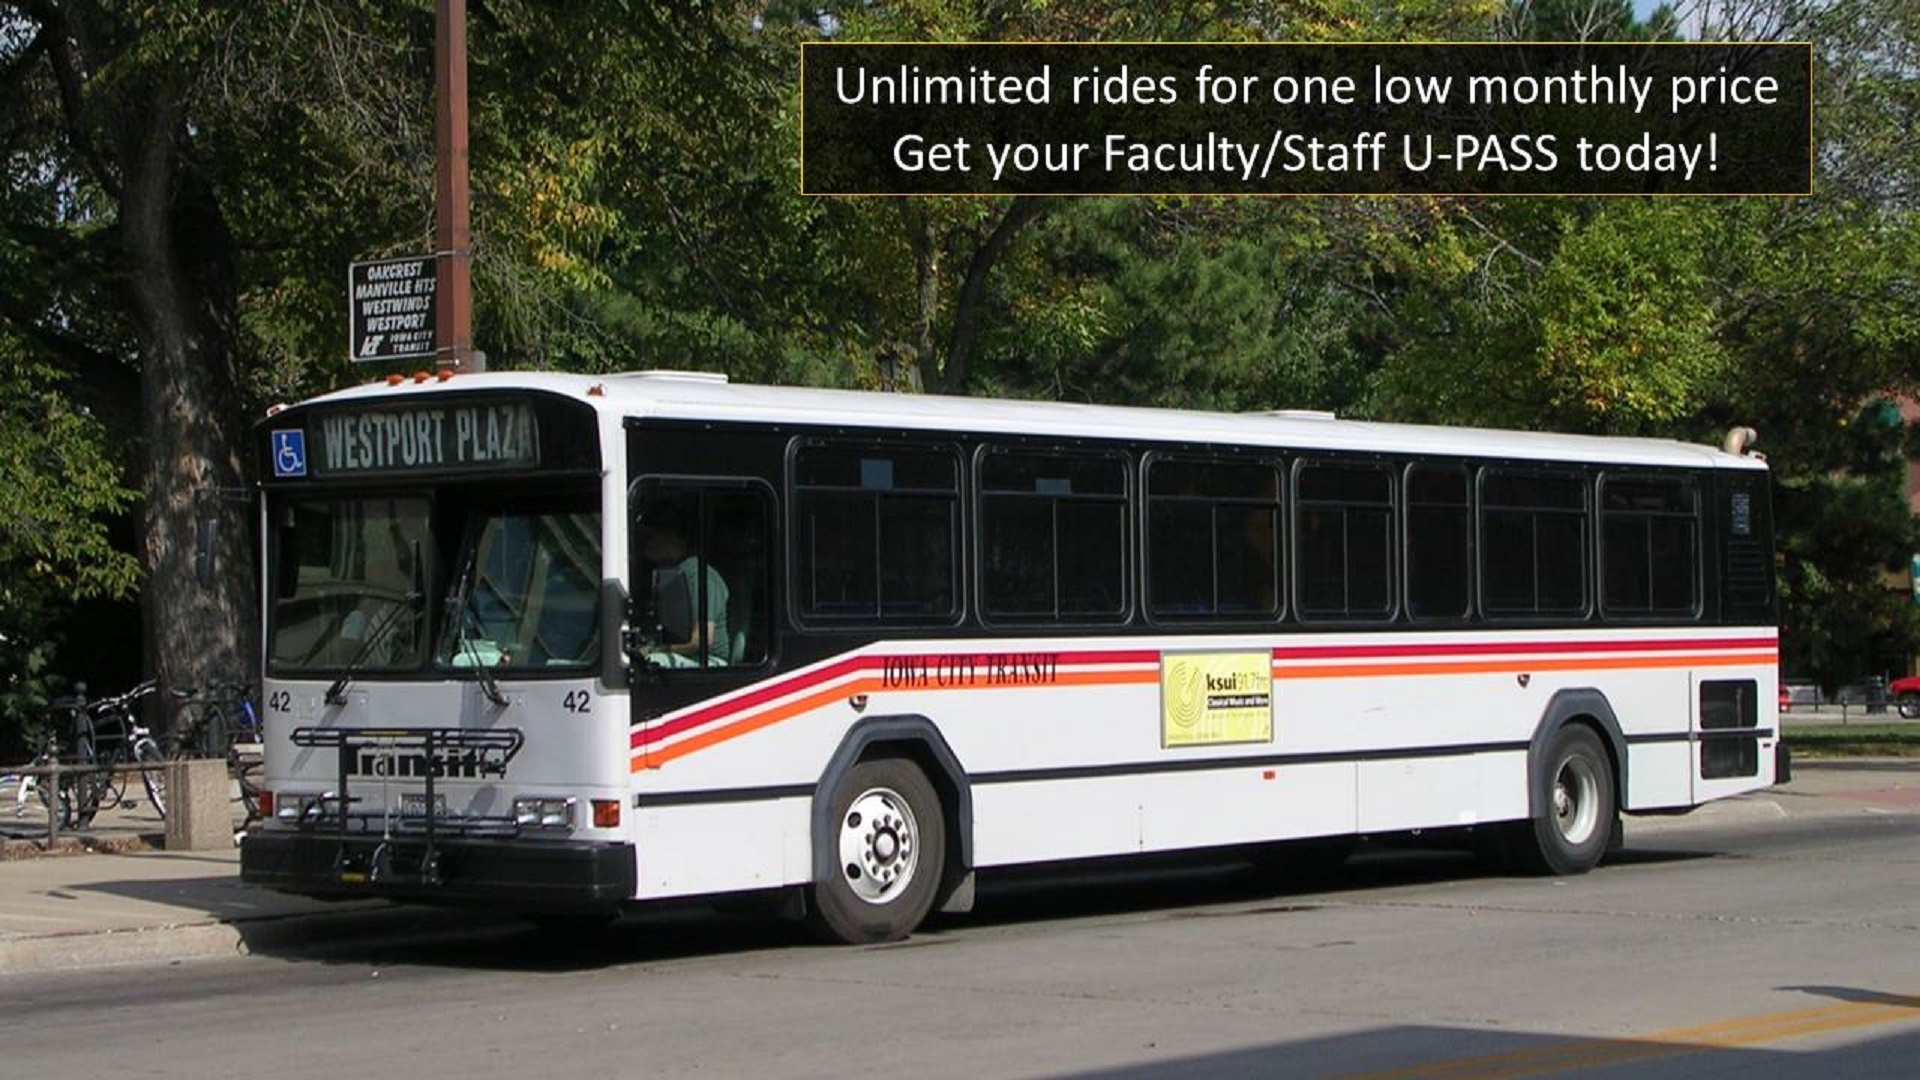 Employee U-passes provide unlimited rides